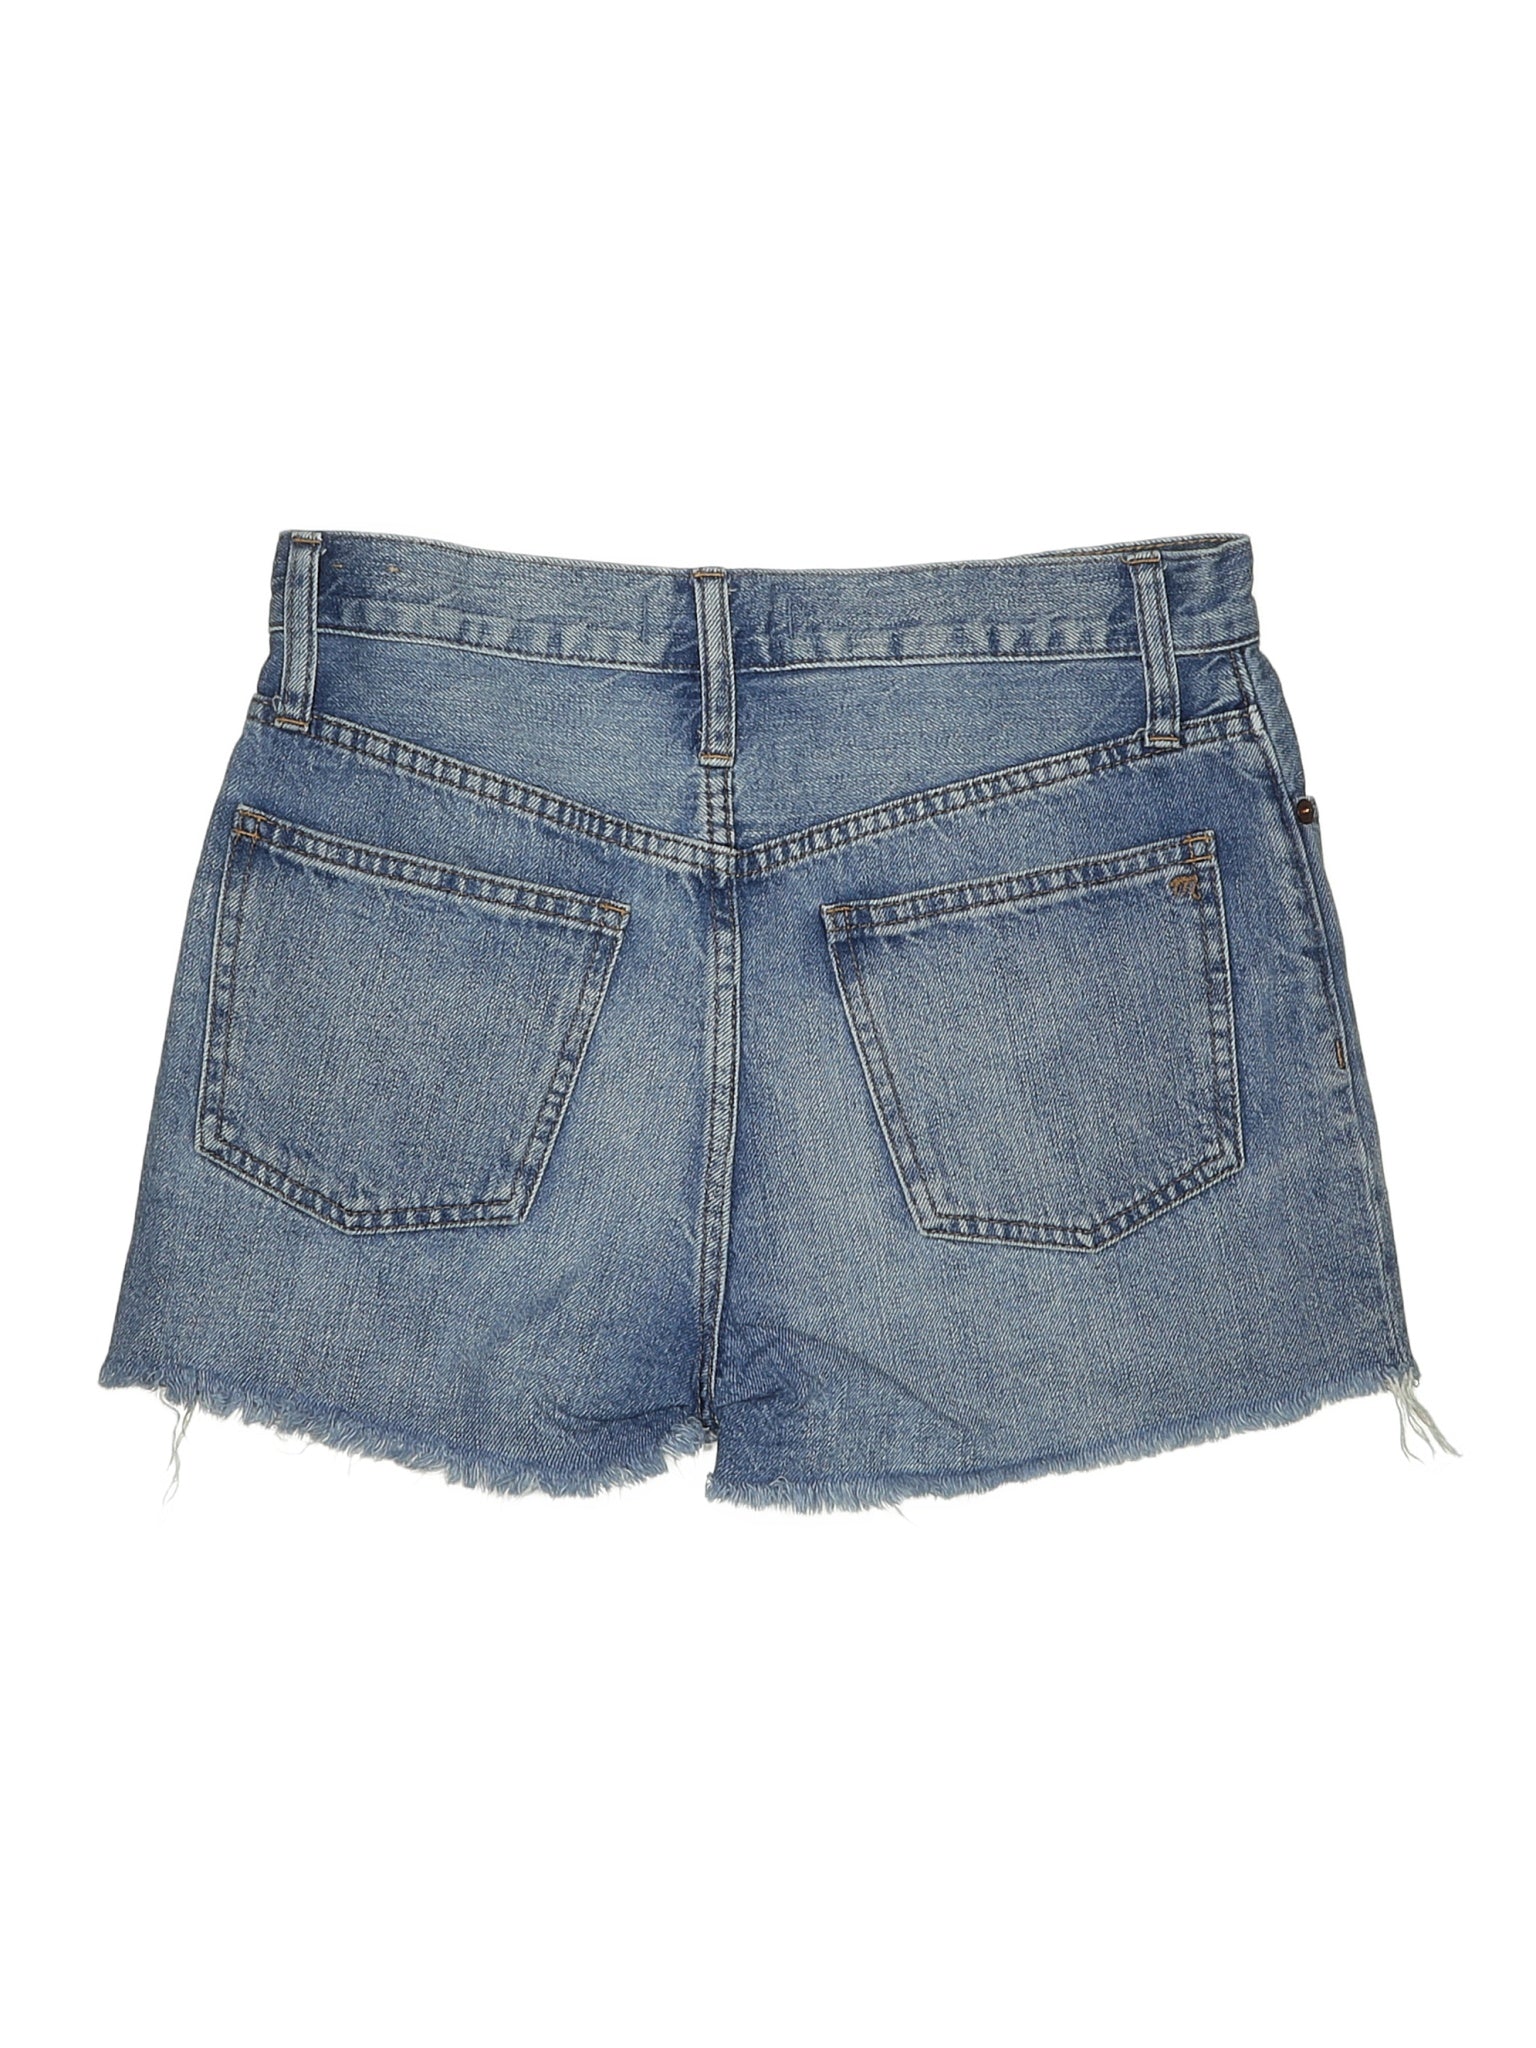 High-Rise Denim Shorts in Medium Wash waist size - 24